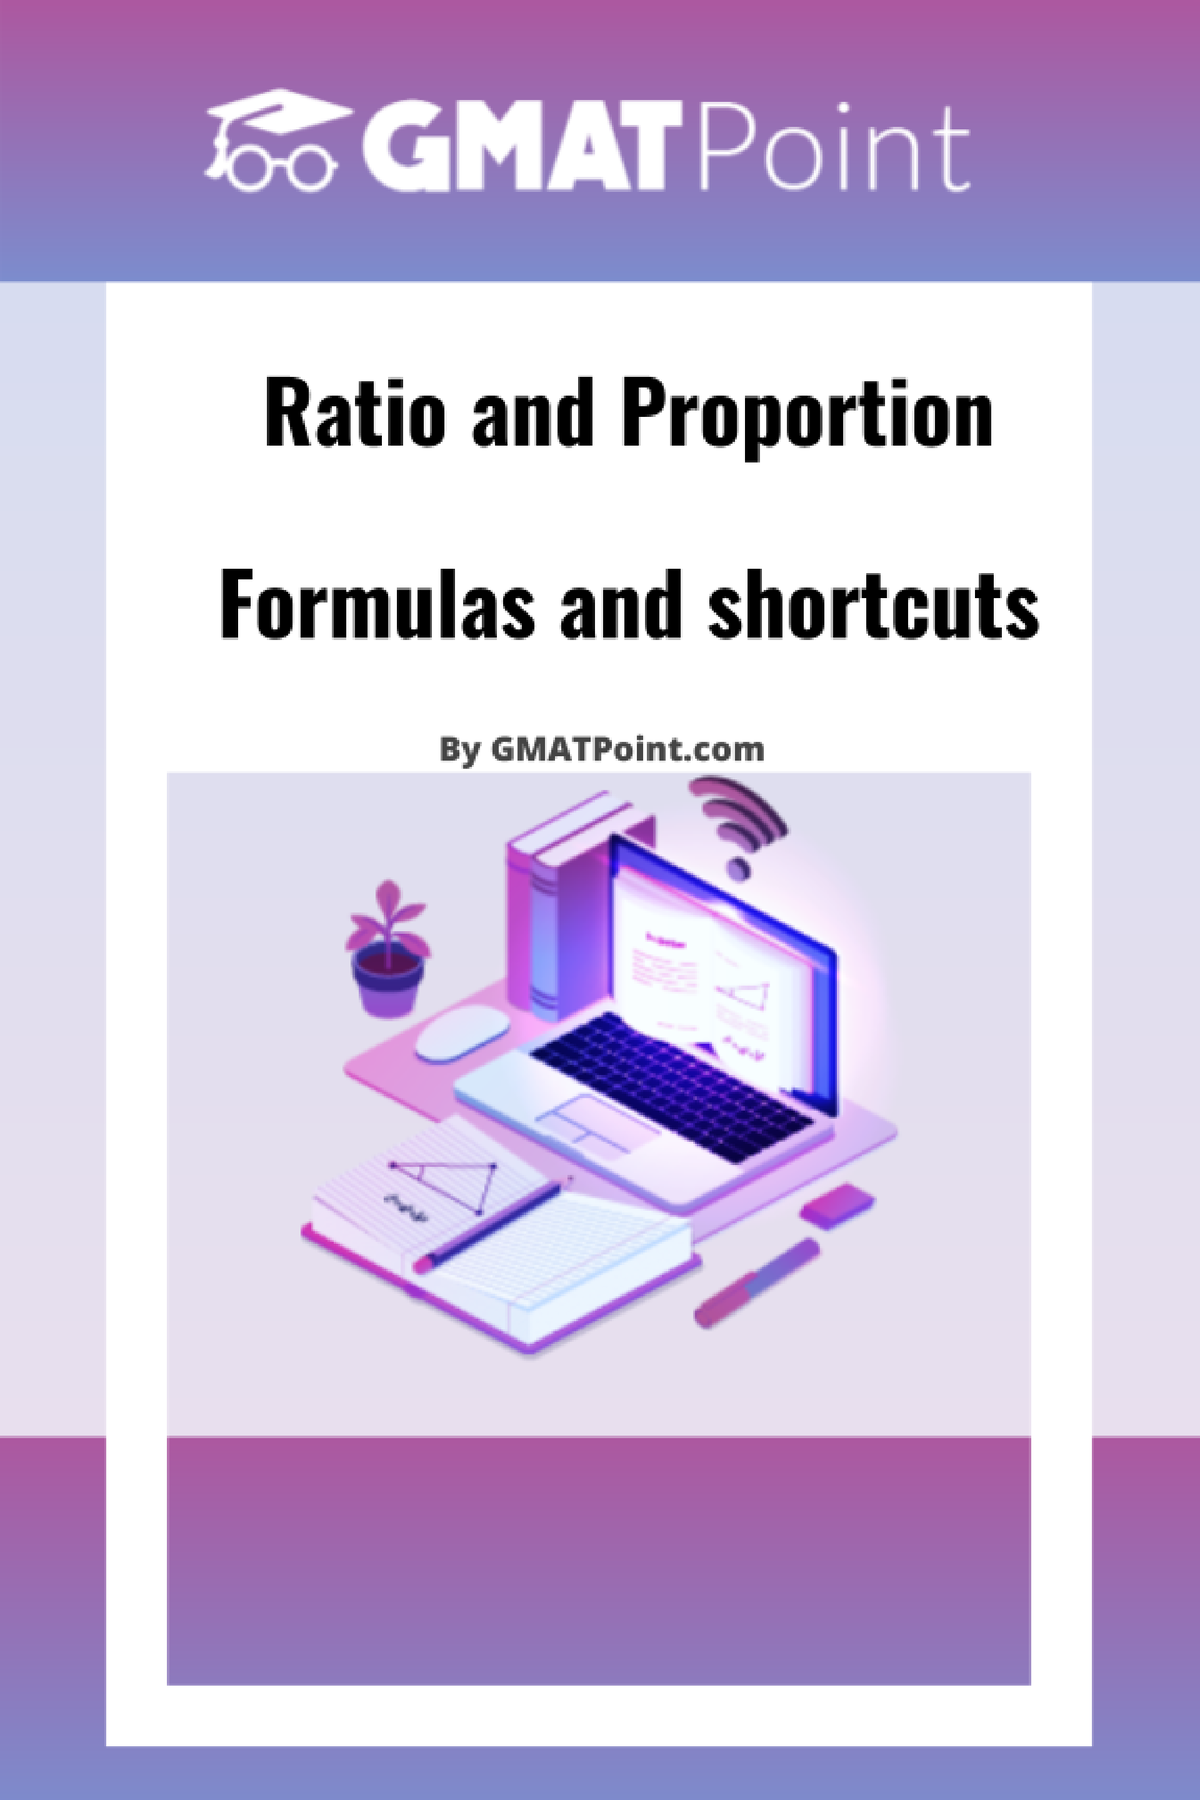 gmat-ratio-and-proportions-formula-pdf-ratio-and-proportion-tips-formulae-and-shortcuts